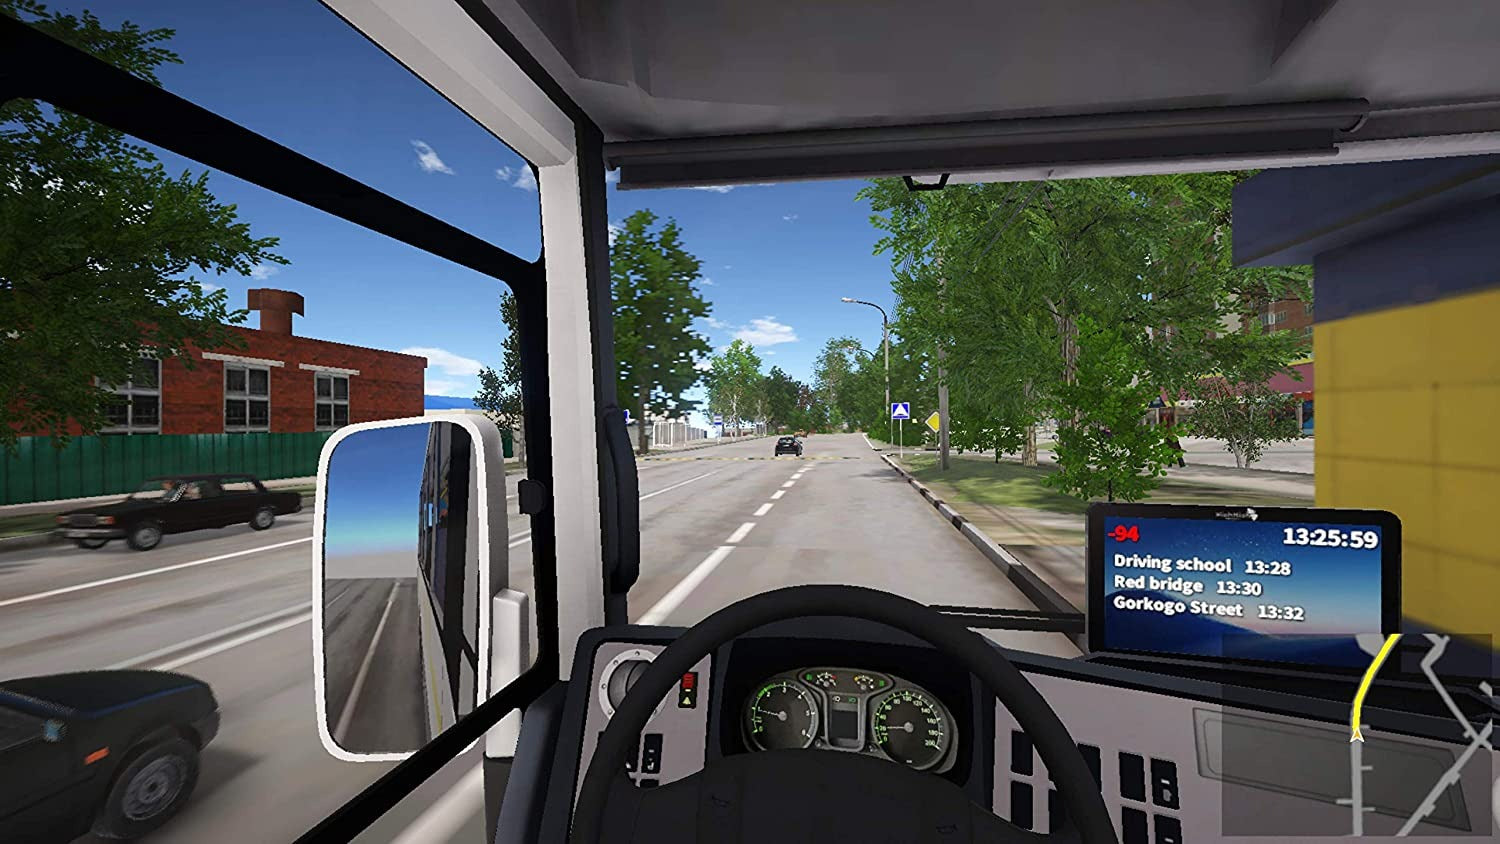 Bus Simulator 21 Standard Ed